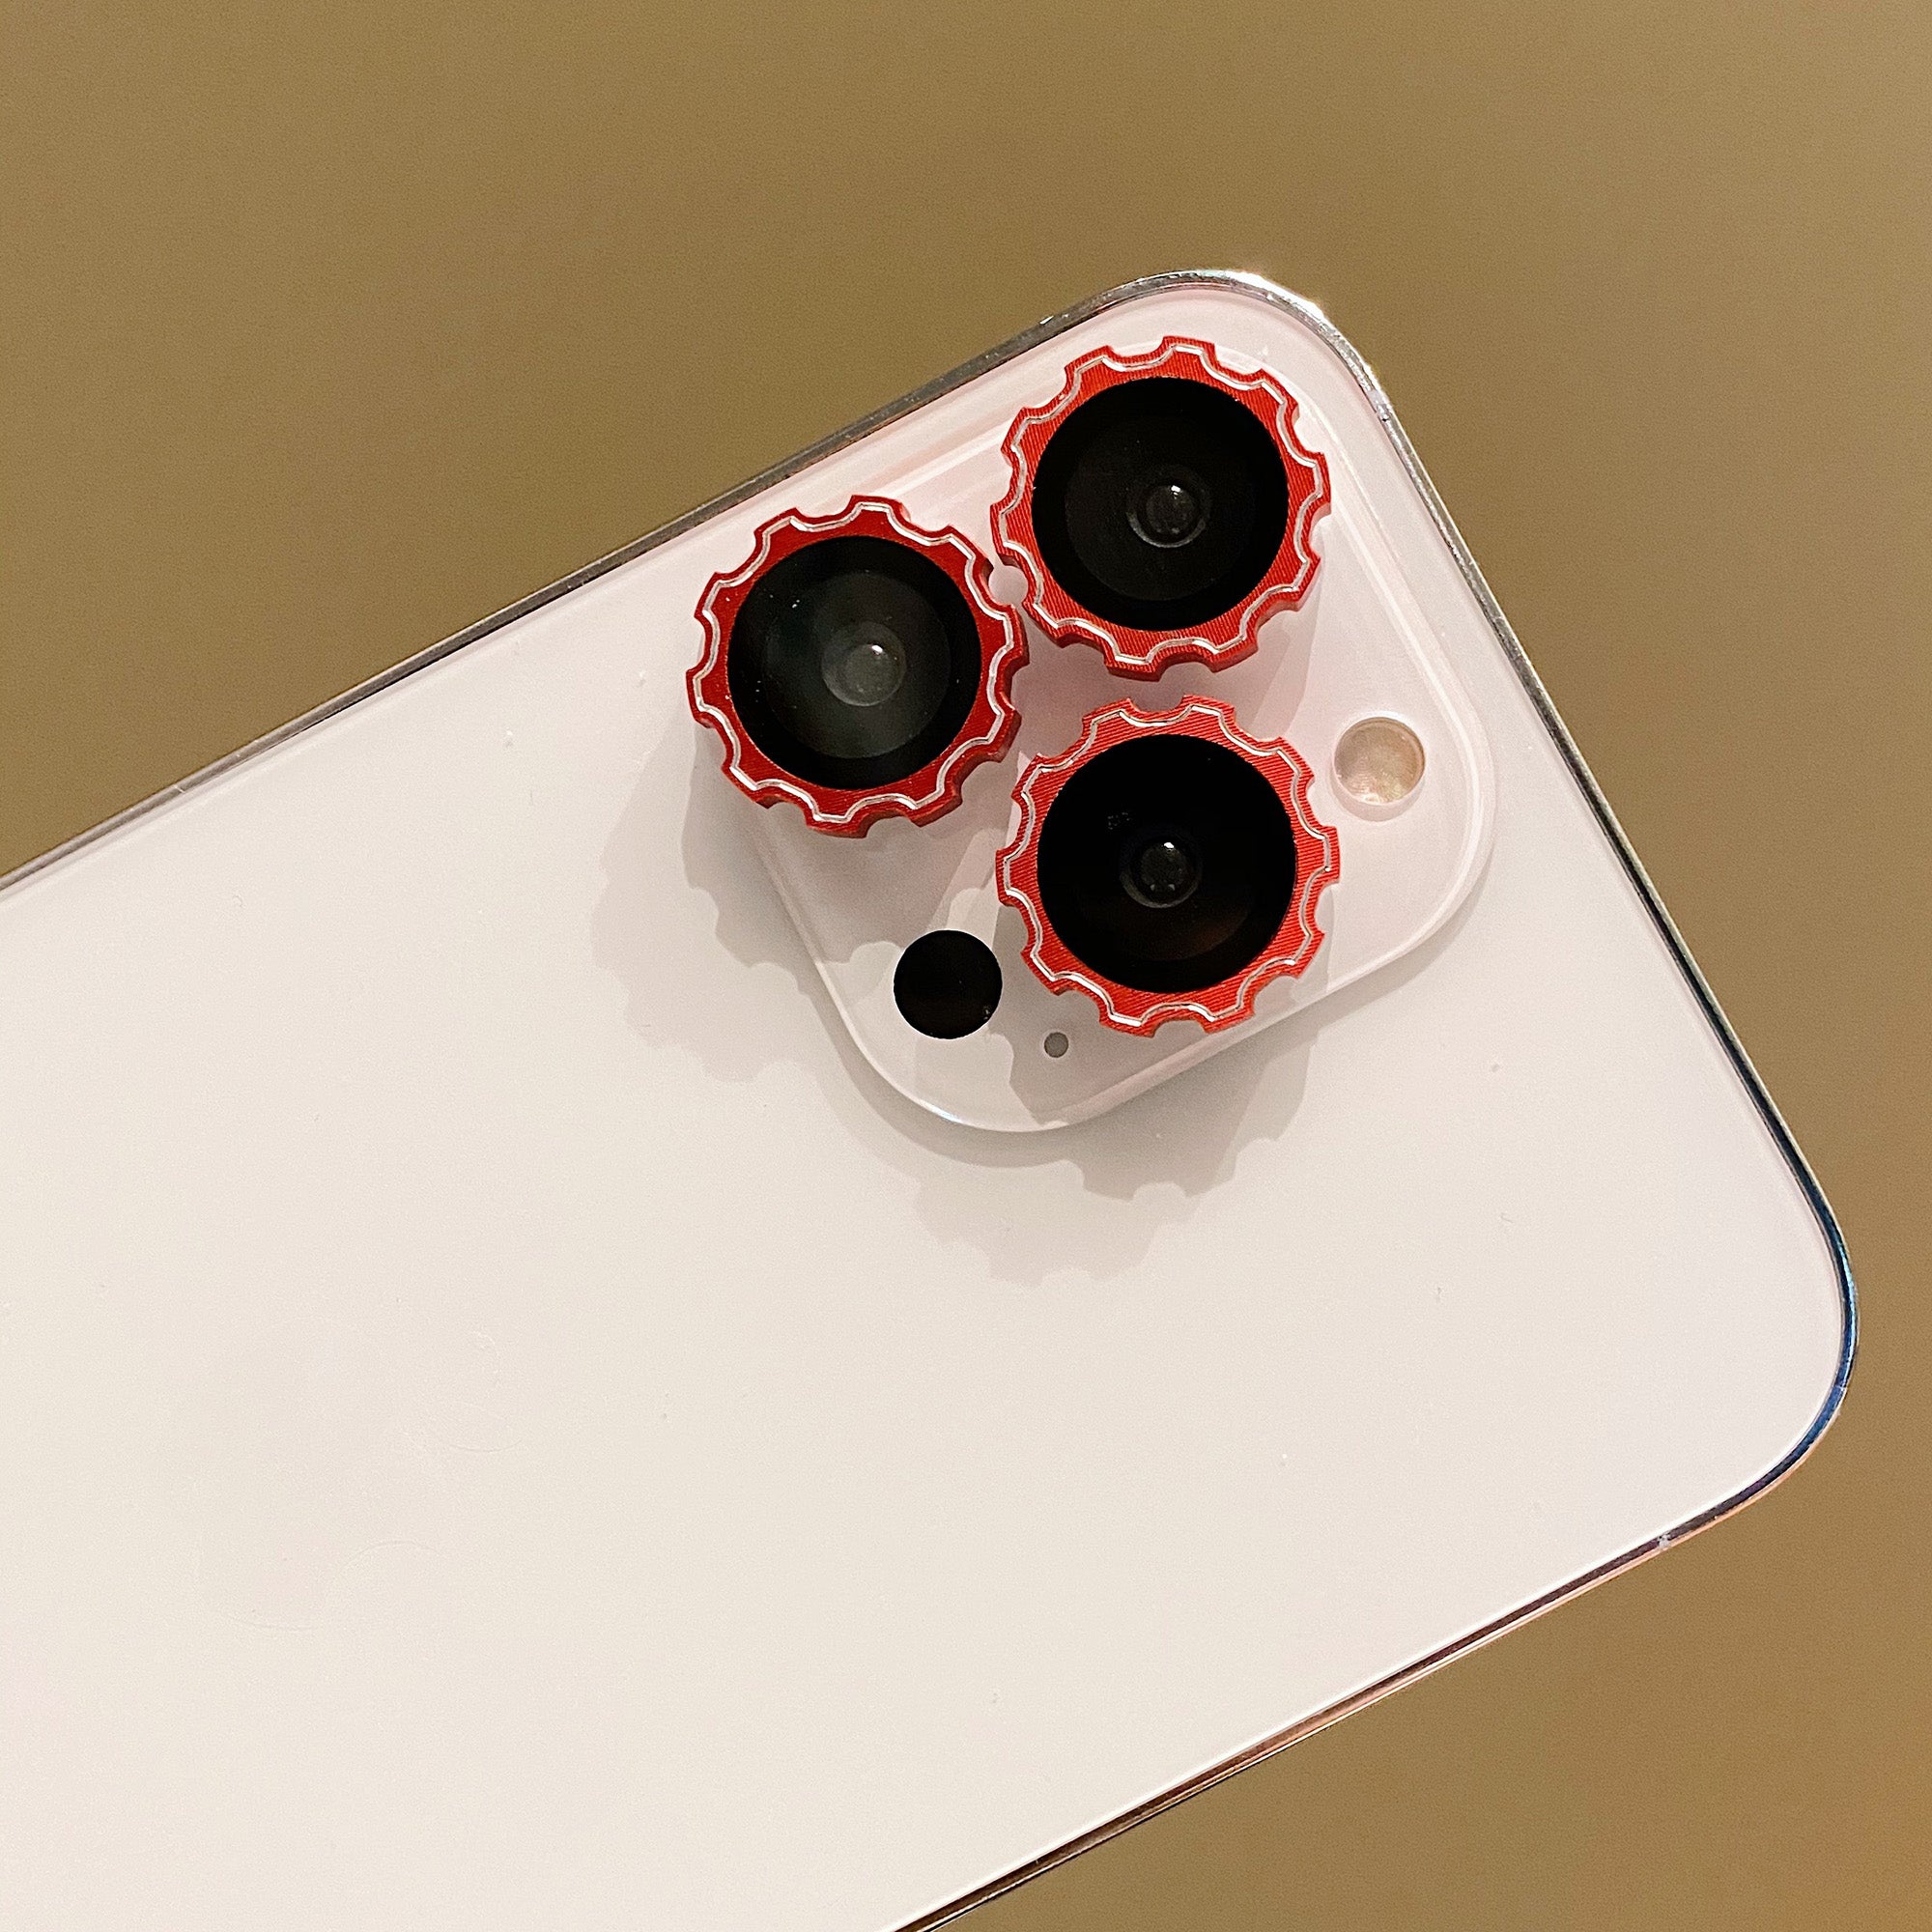 Uniqkart For iPhone 14 Pro / 14 Pro Max Camera Lens Protector Screw Cap Design Tempered Glass Ring Lens Cover Film - Red